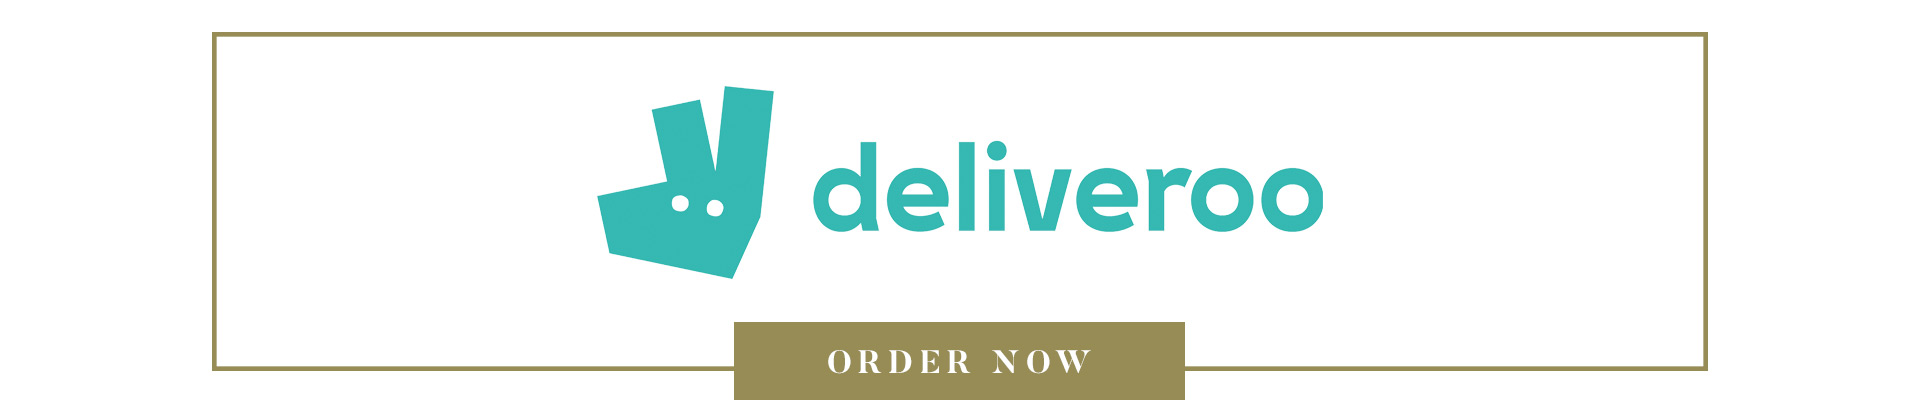 pcp-mandarin-delivery-deliveroo-sb-banner-wide.jpg